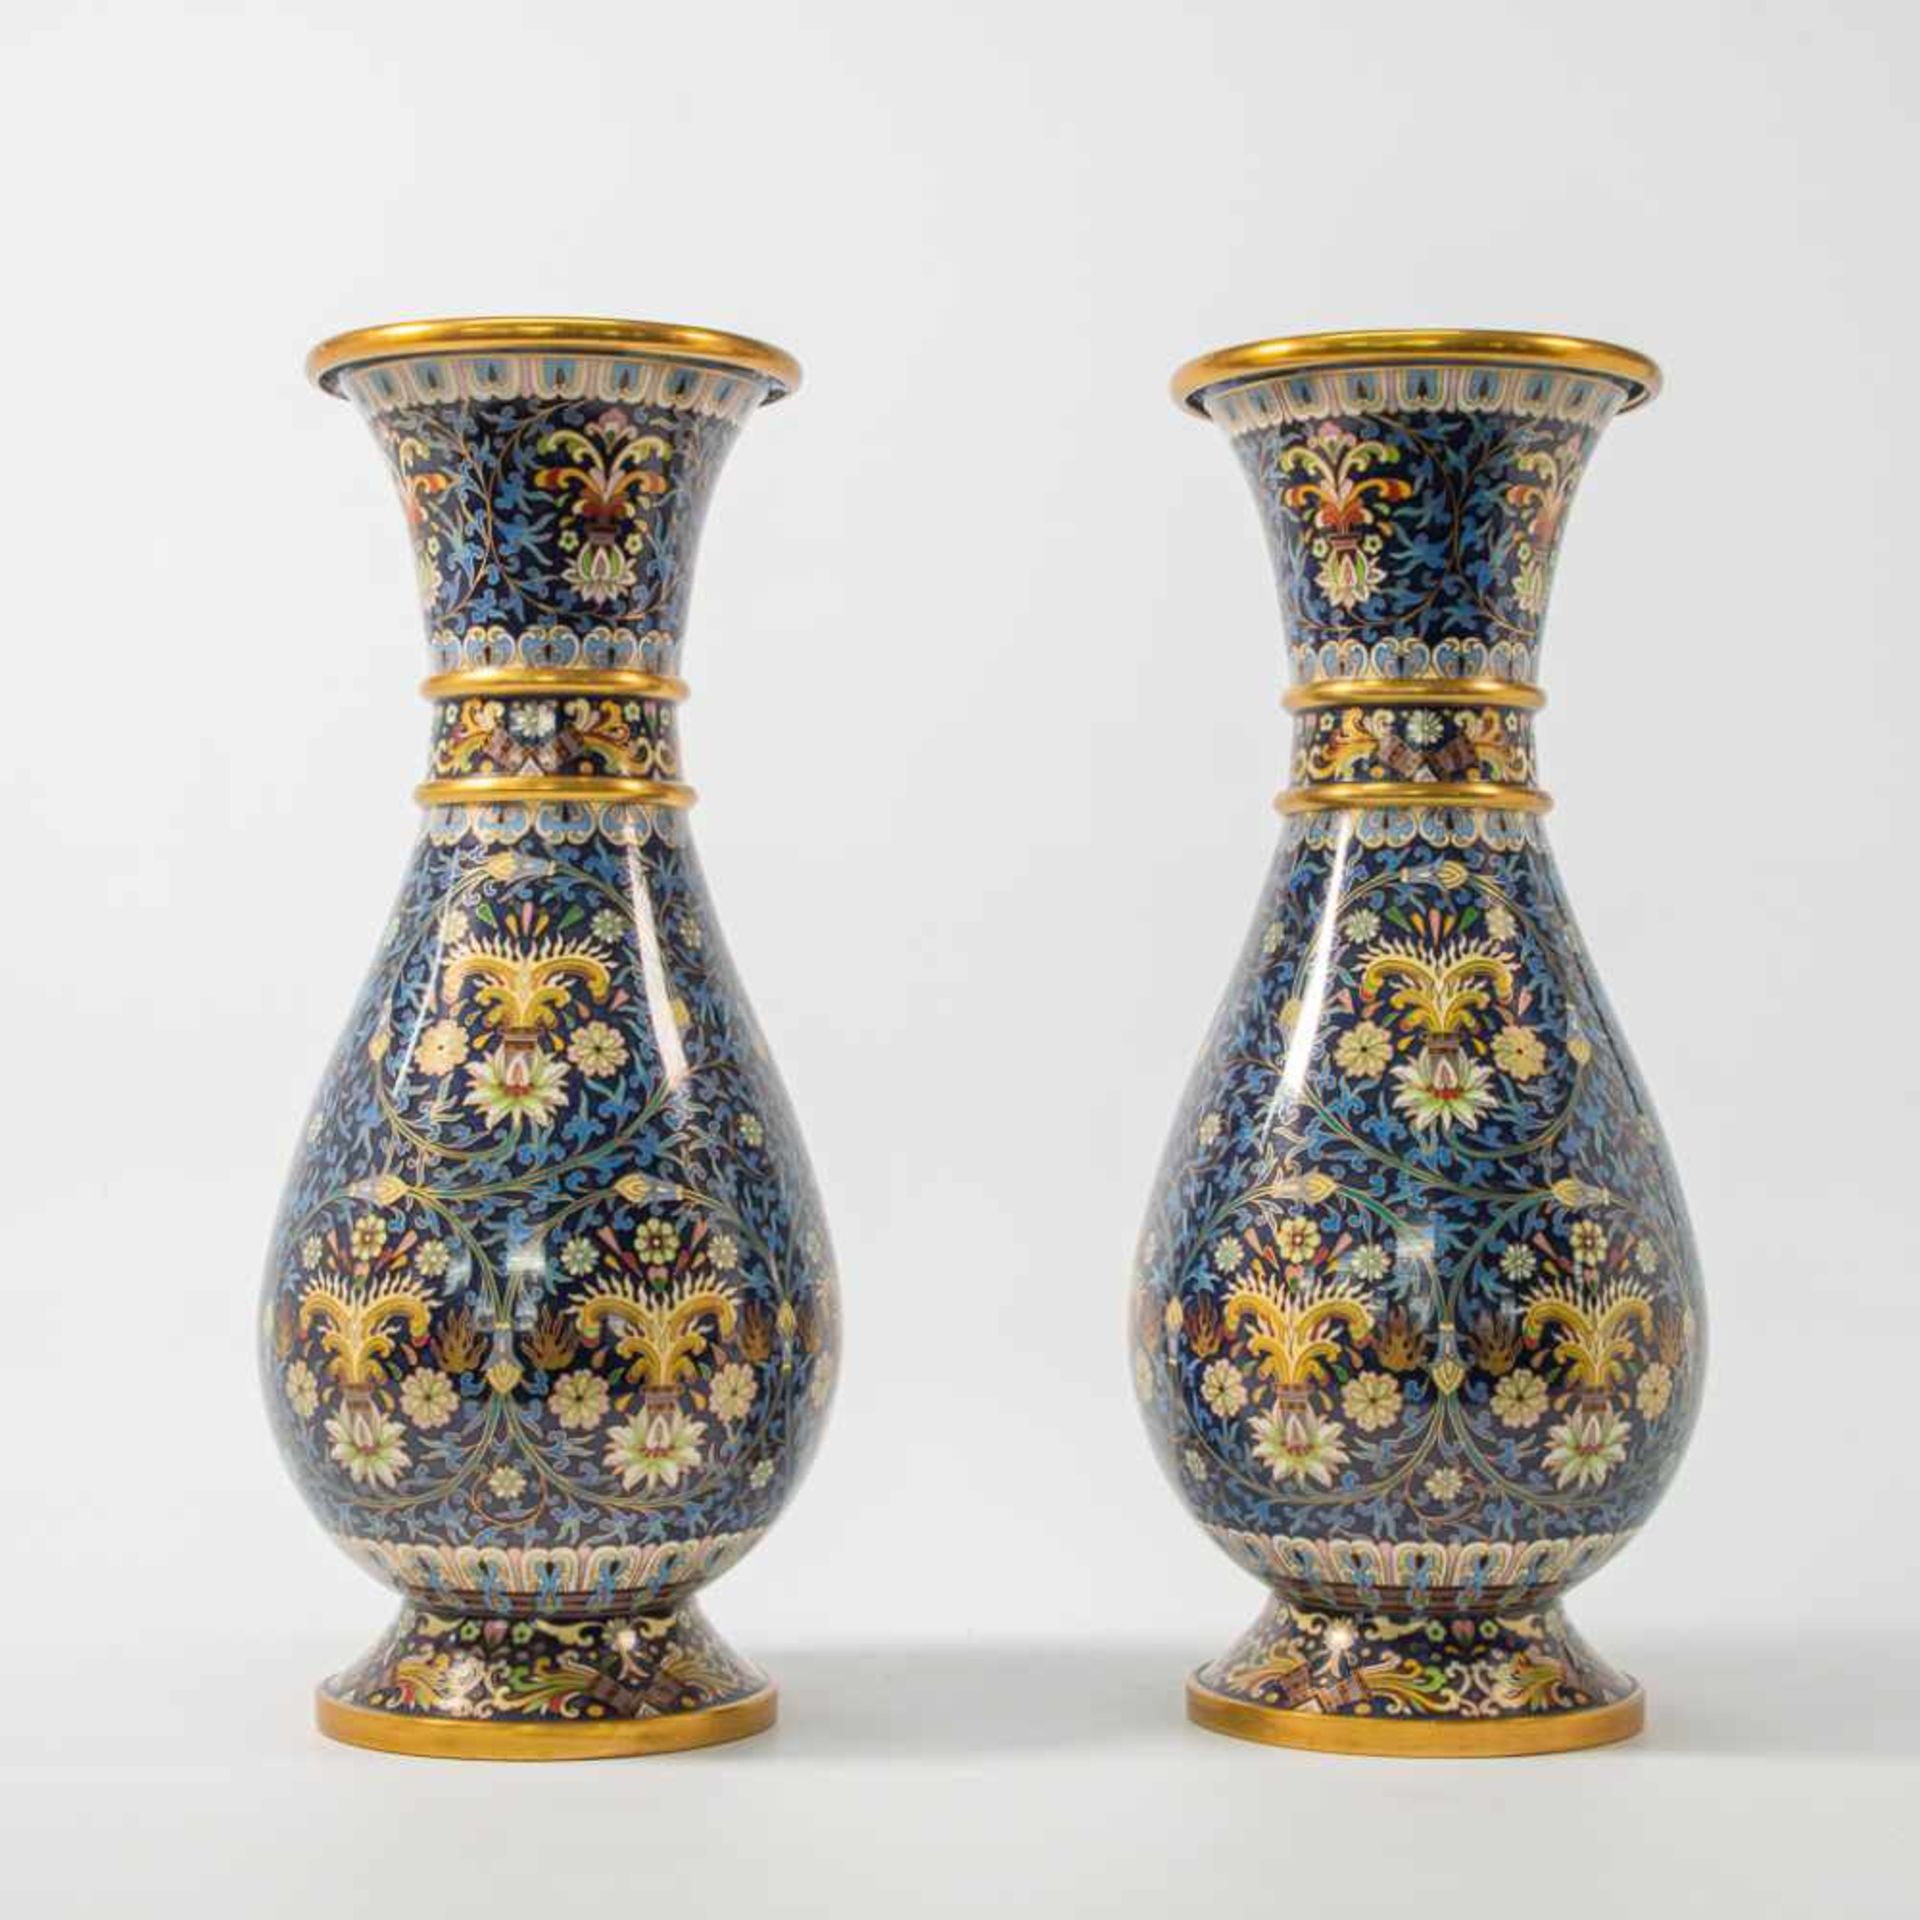 Pair of CloisonnÈ vases